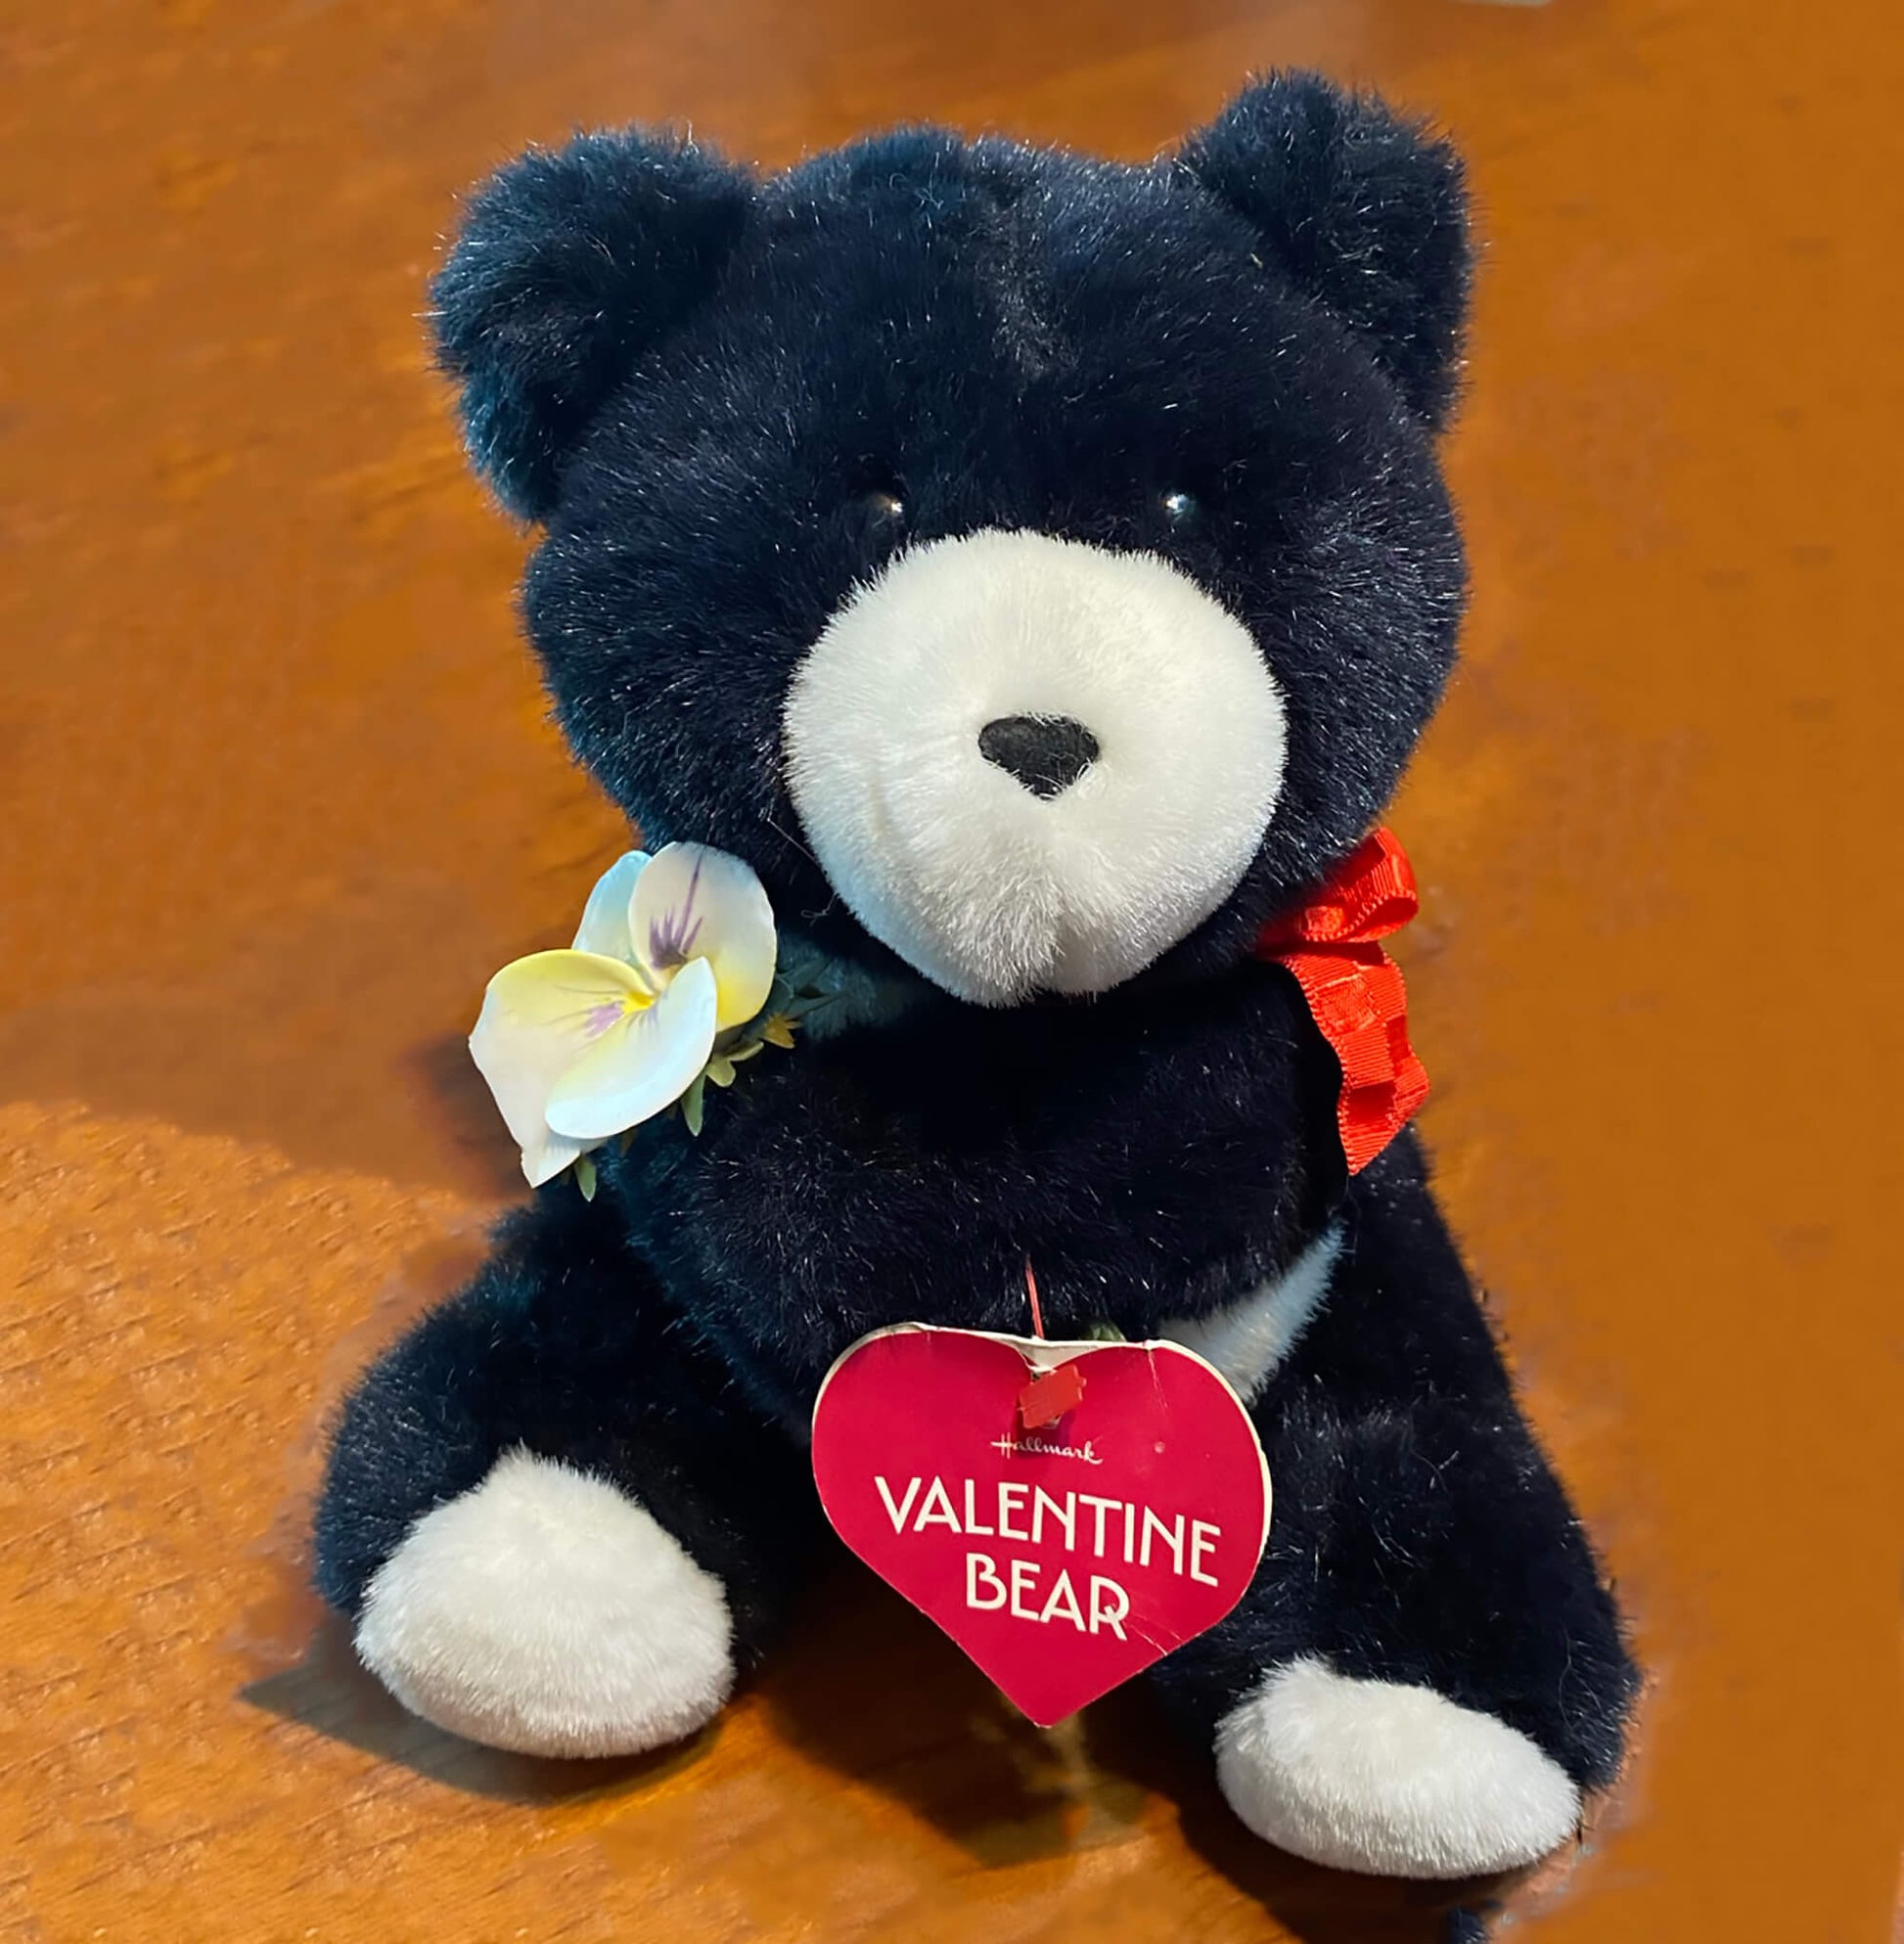 Hallmark-Valentine-Black-Panda-Bear-side-view2-Hallmark-Valentine-Black-Panda-Bear-side-view2